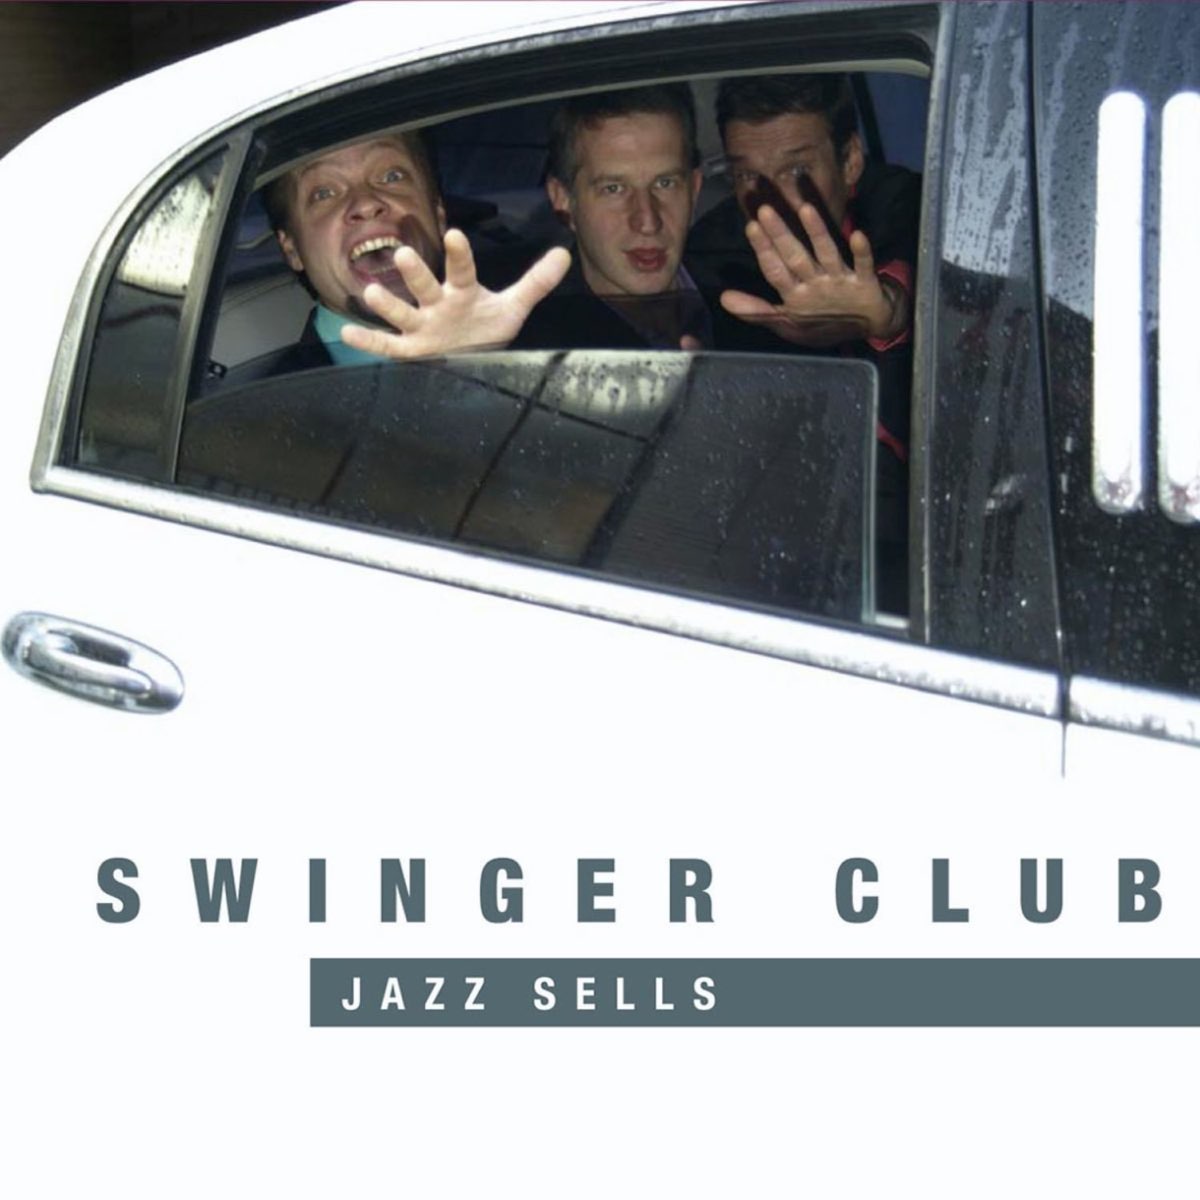 swinger club jazz sells